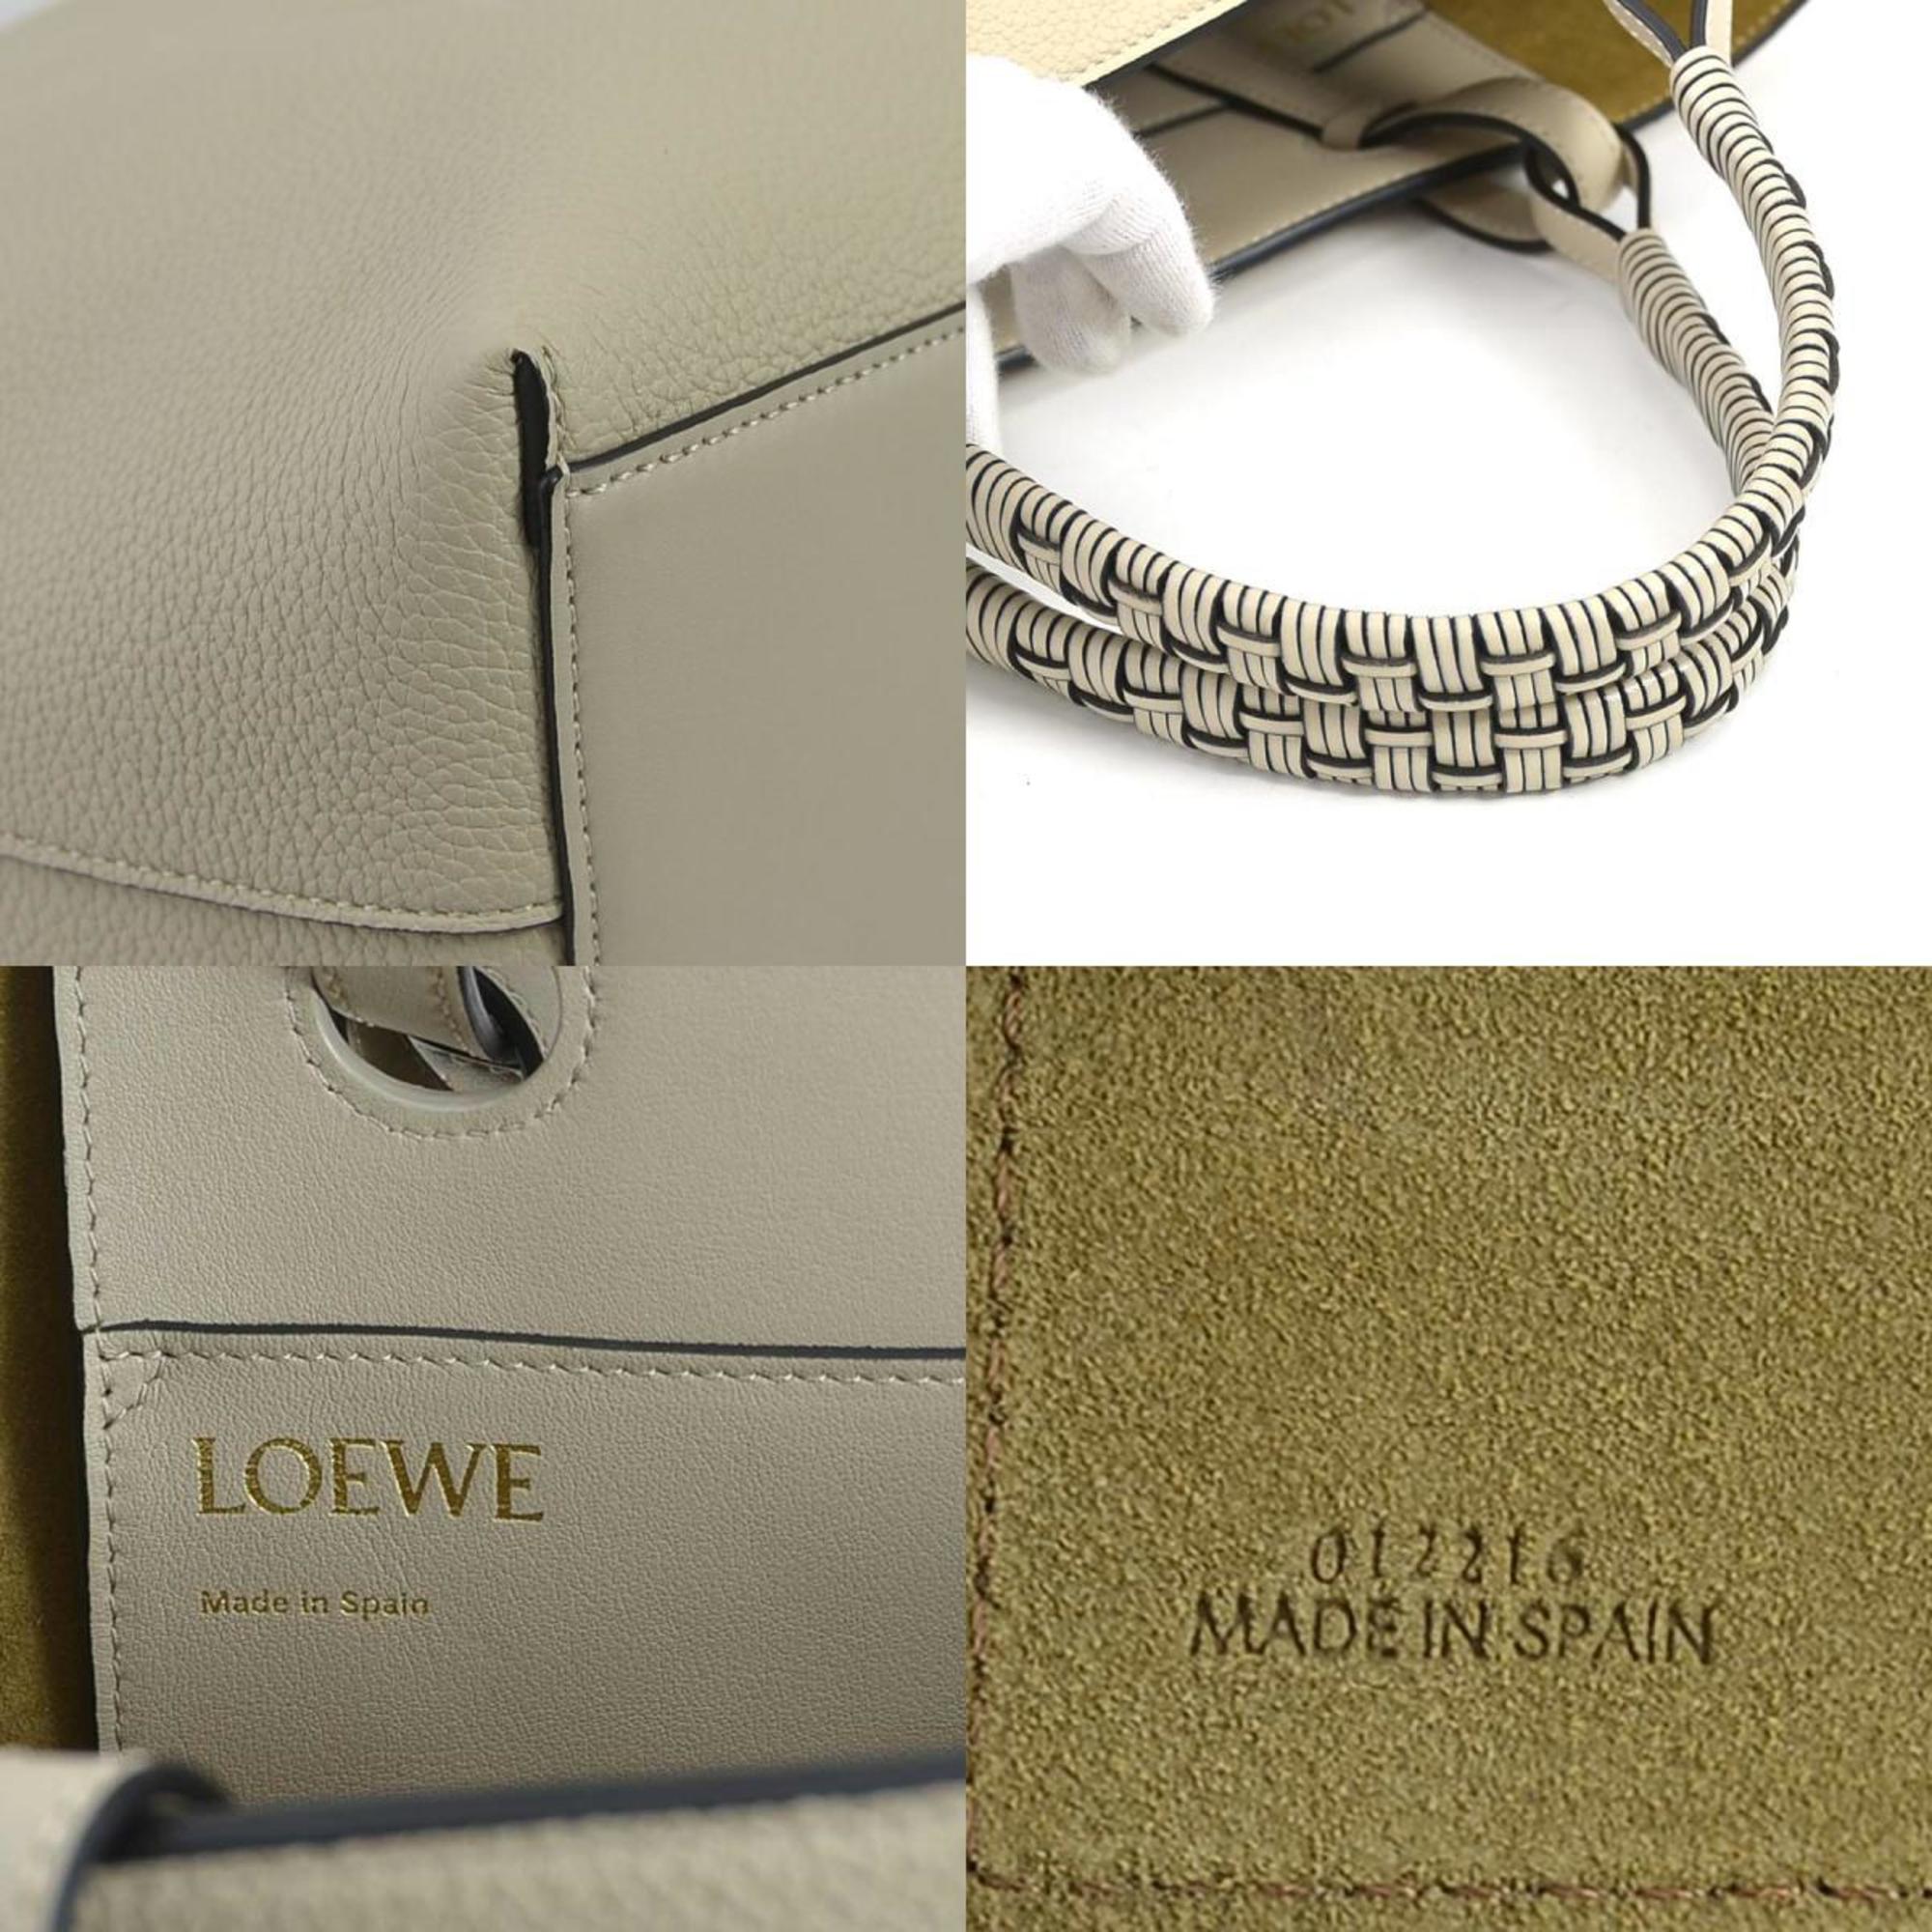 LOEWE Handbag Shoulder Bag Anagram Grain Calf Leather Light Beige Women's A717S72X3